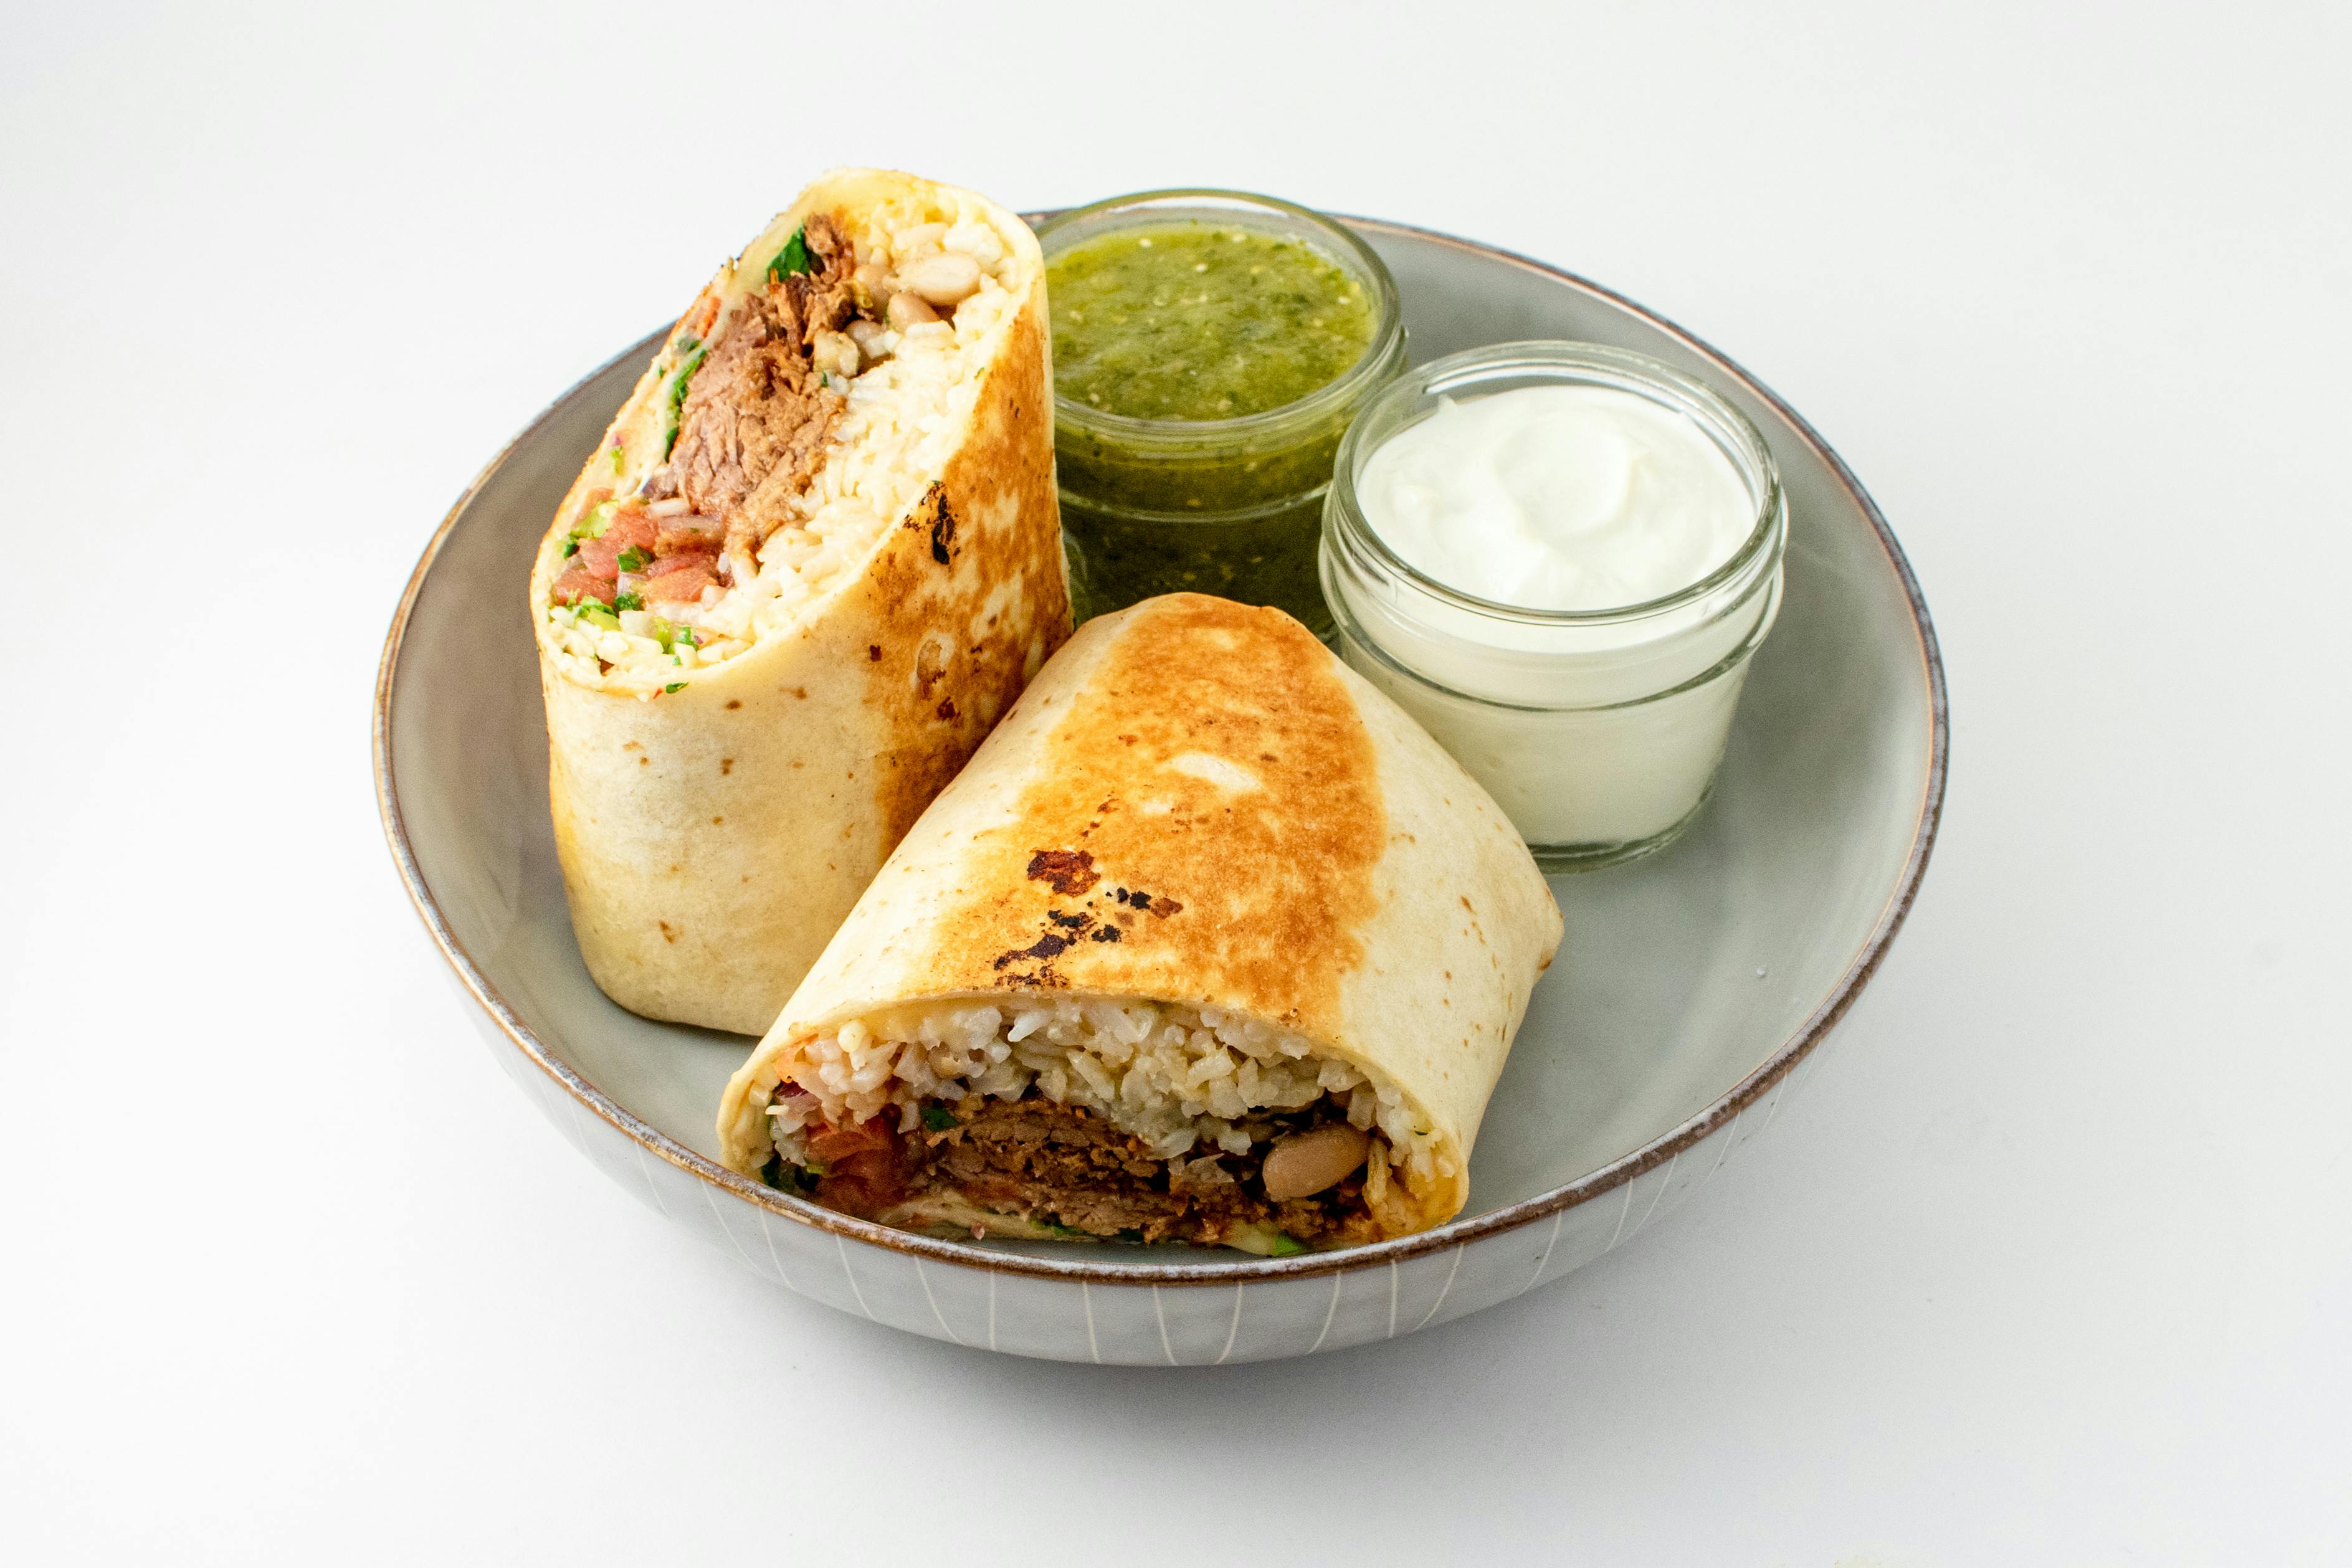 12 Hour Brisket Burrito from Taco Royale - N Main St in Oshkosh, WI